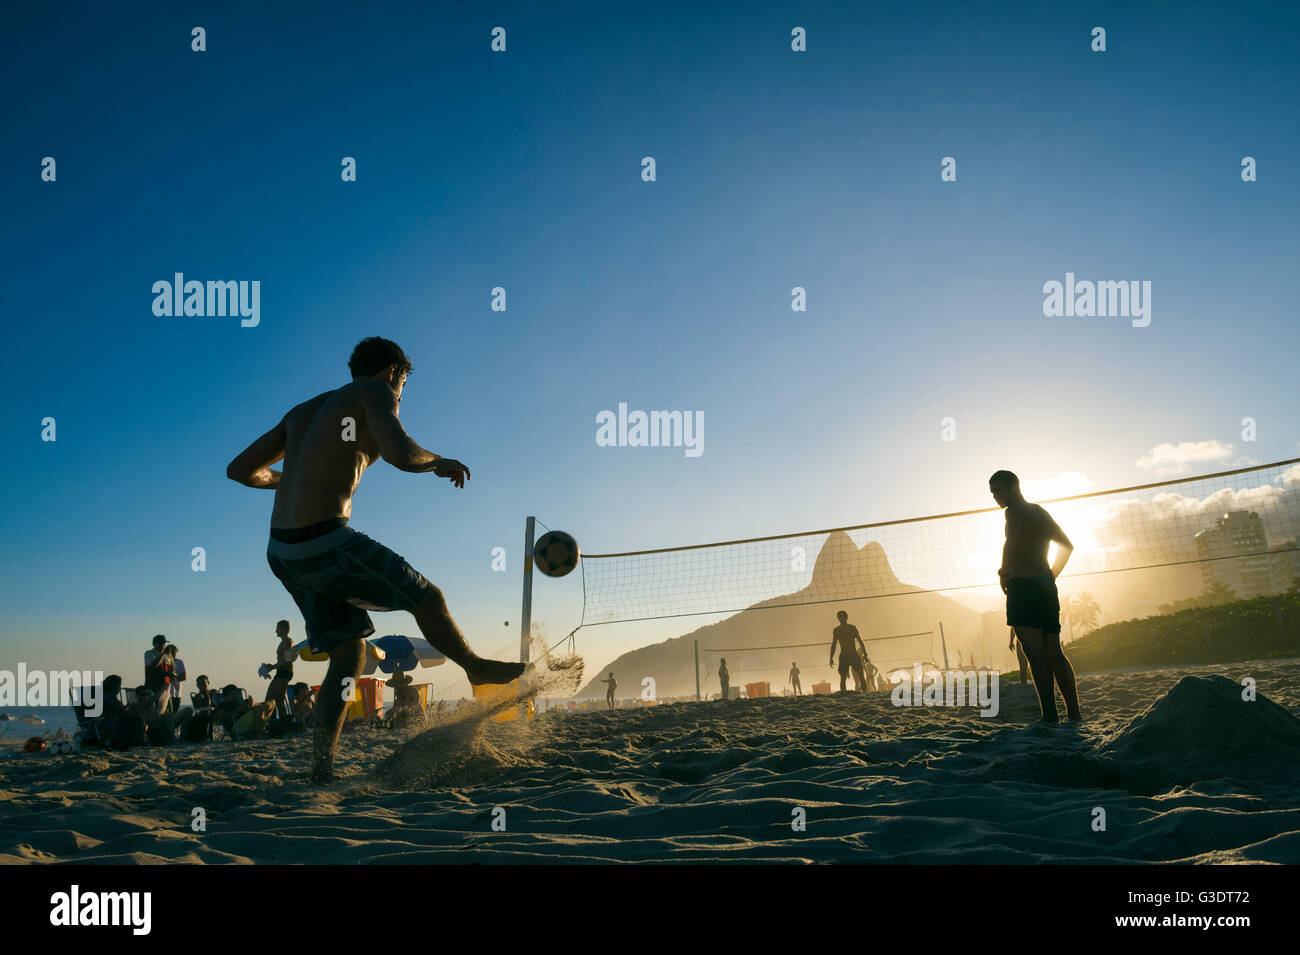 RIO DE JANEIRO - MARCH 27, 2016: Brazilians play futevôlei (footvolley, a sport combining football/soccer and volleyball). Stock Photo